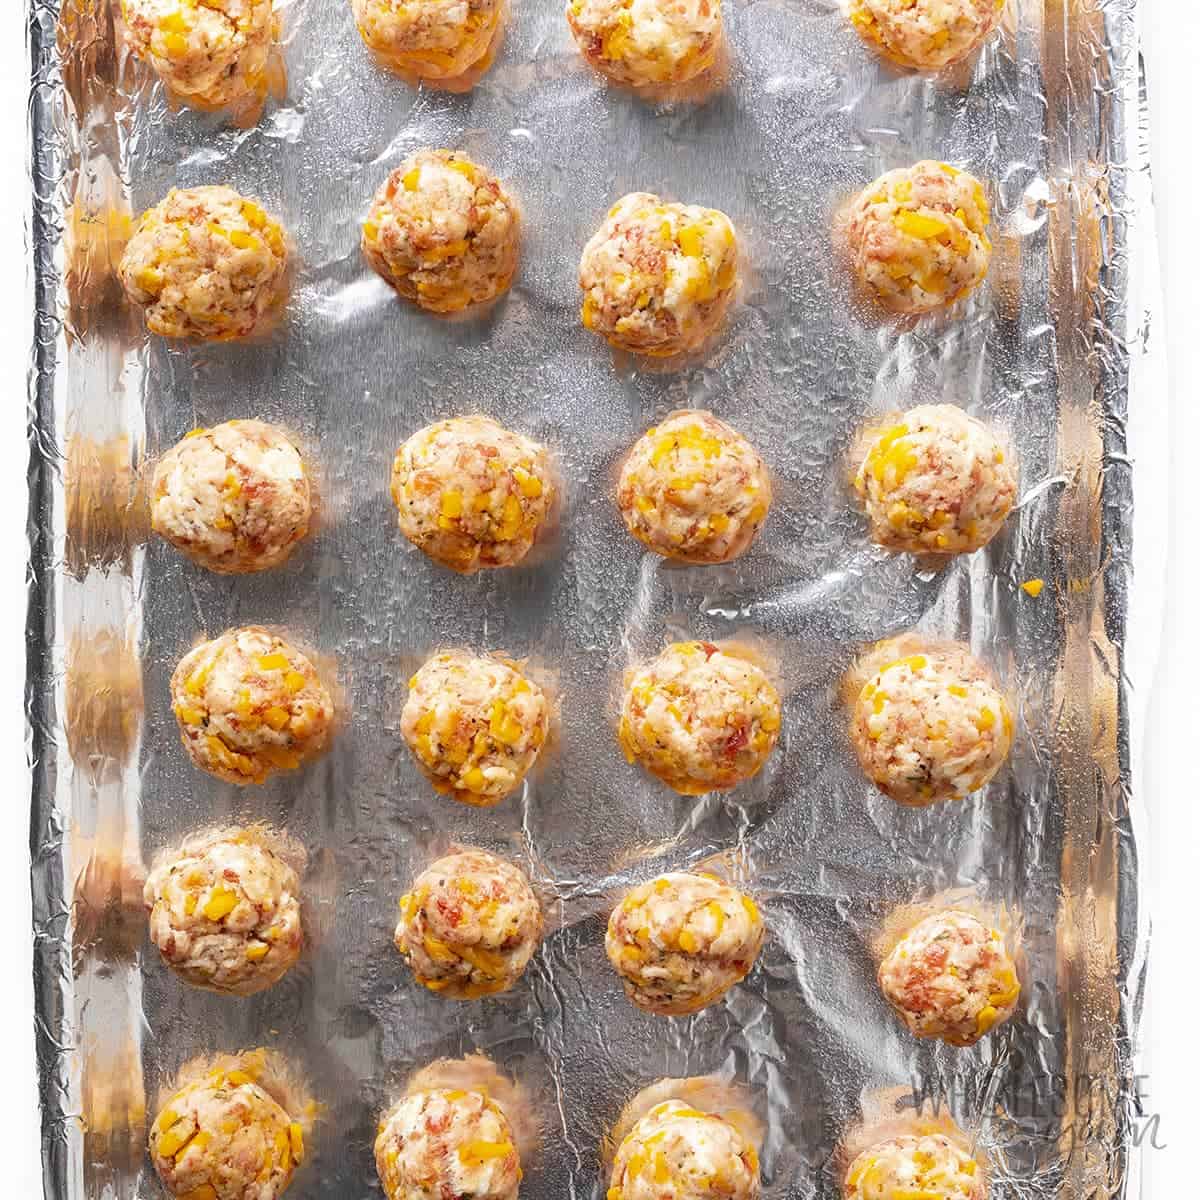 Raw cream cheese sausage balls on a baking sheet.